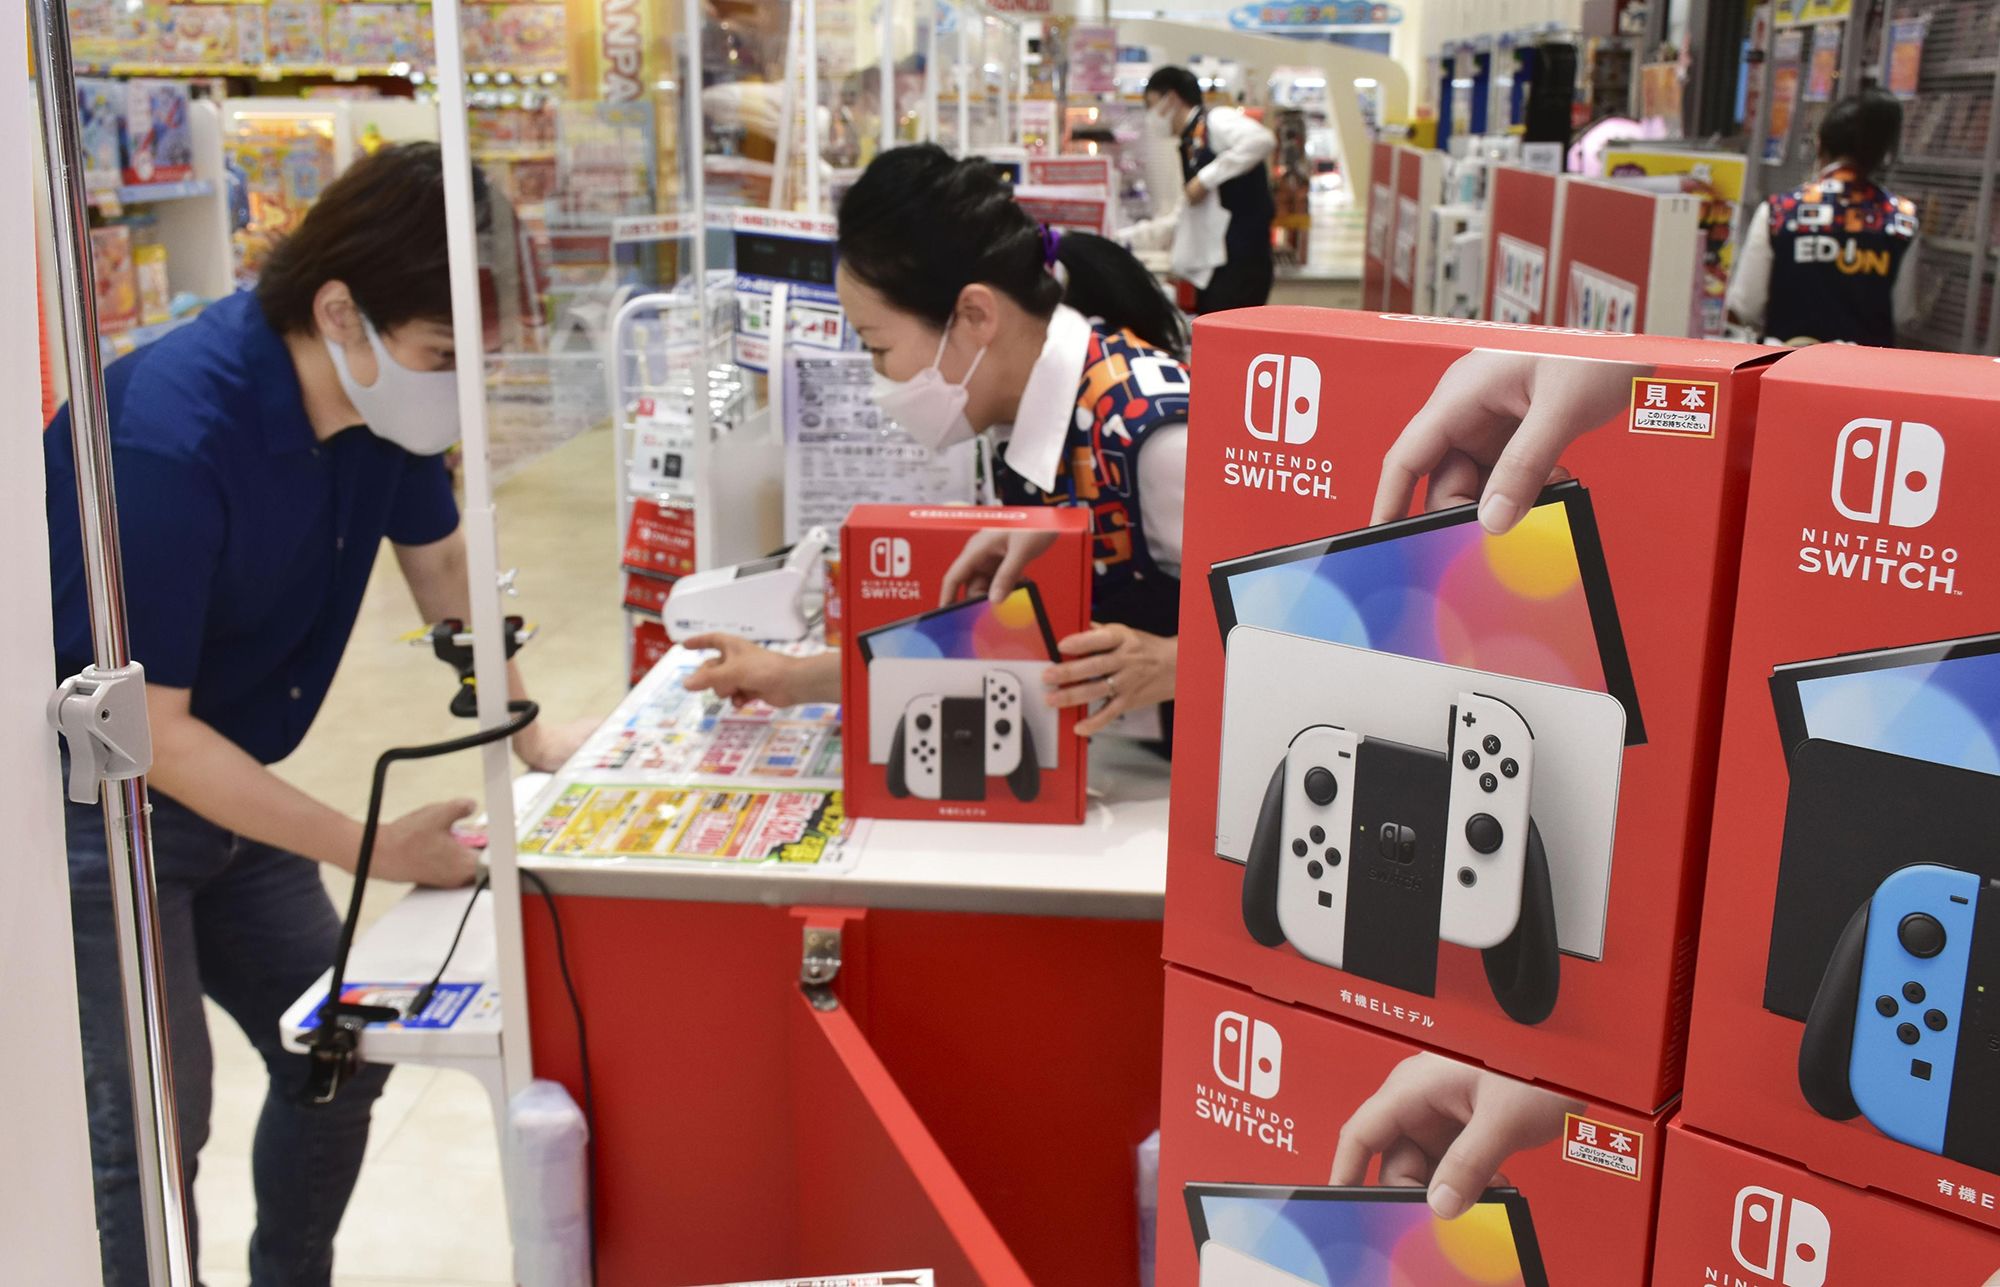 Go nintendo switch. Nintendo Switch магазин. Нинтендо свитч сторе. Нинтендо свитч кампания в Японии. Nintendo Switch in Store mvideo.